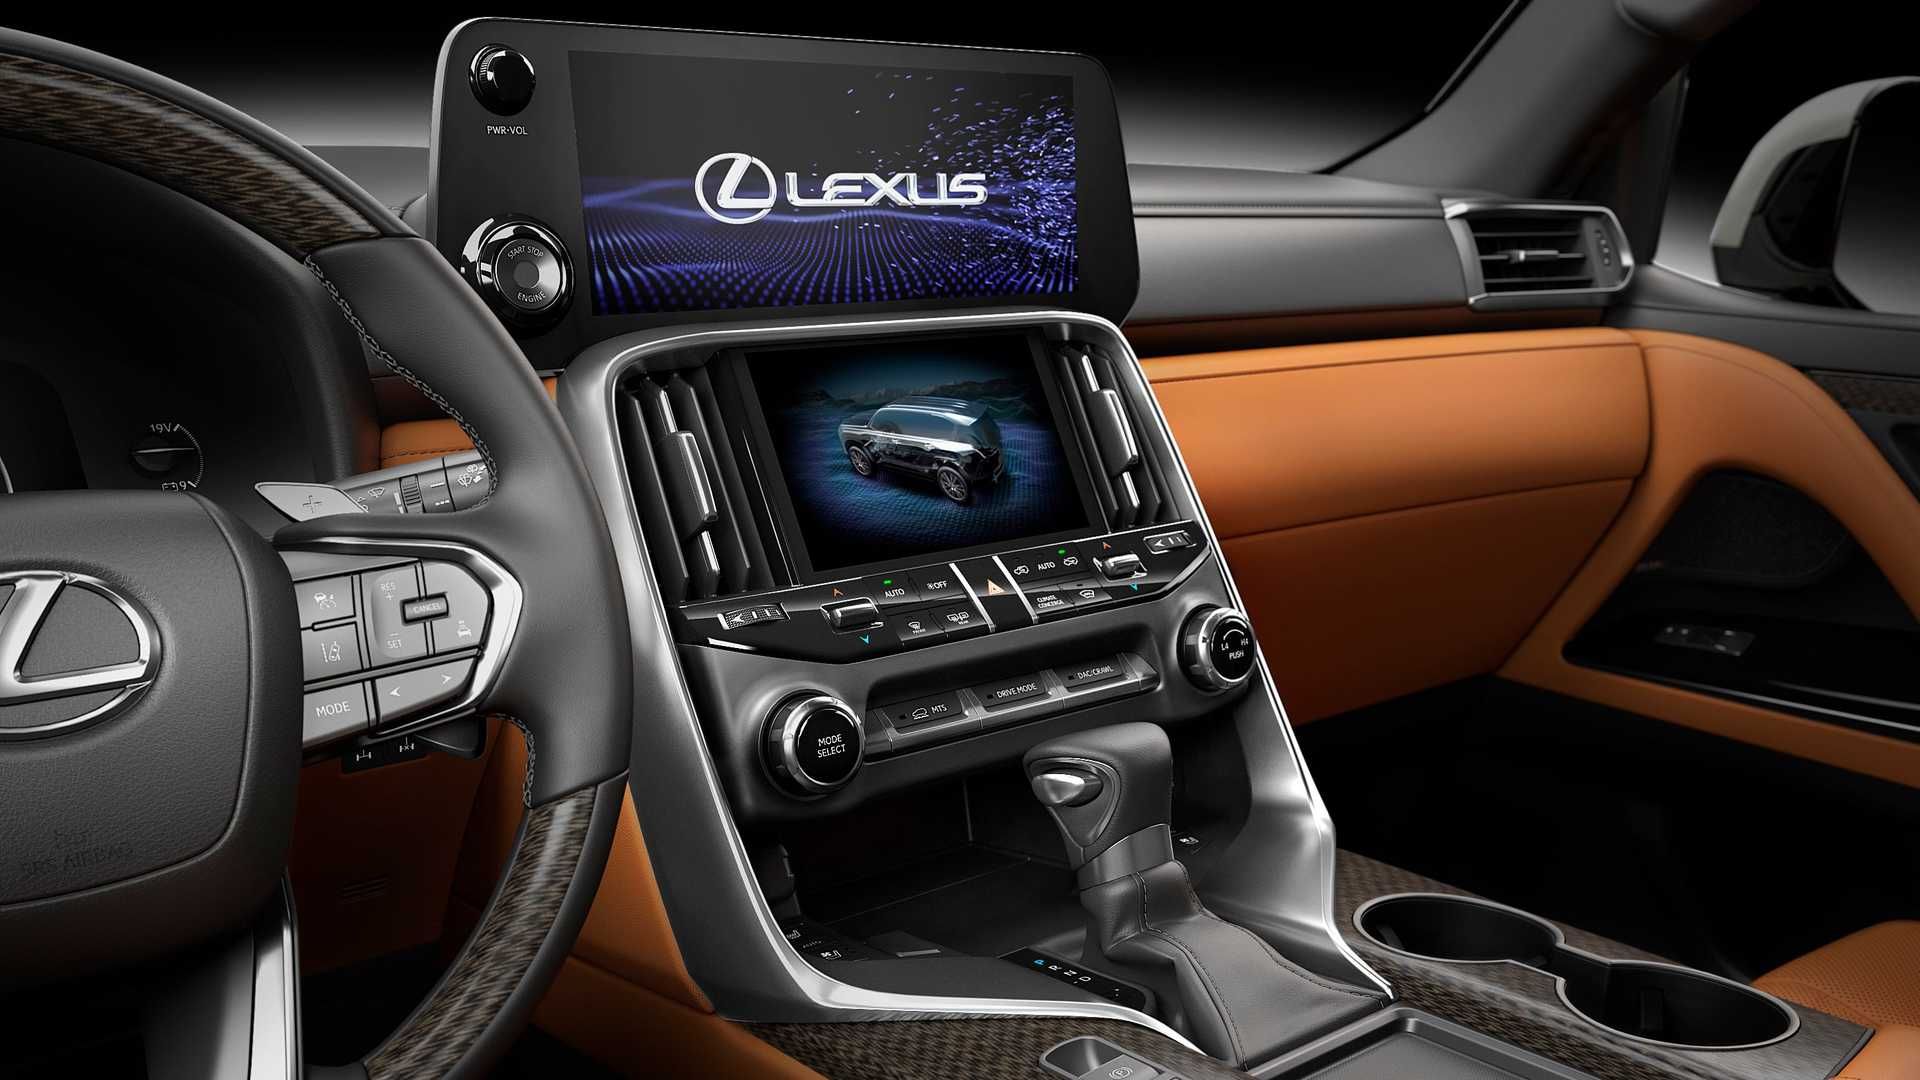  Lexus LX 2022 نمایشگر لکسوس ال ایکس